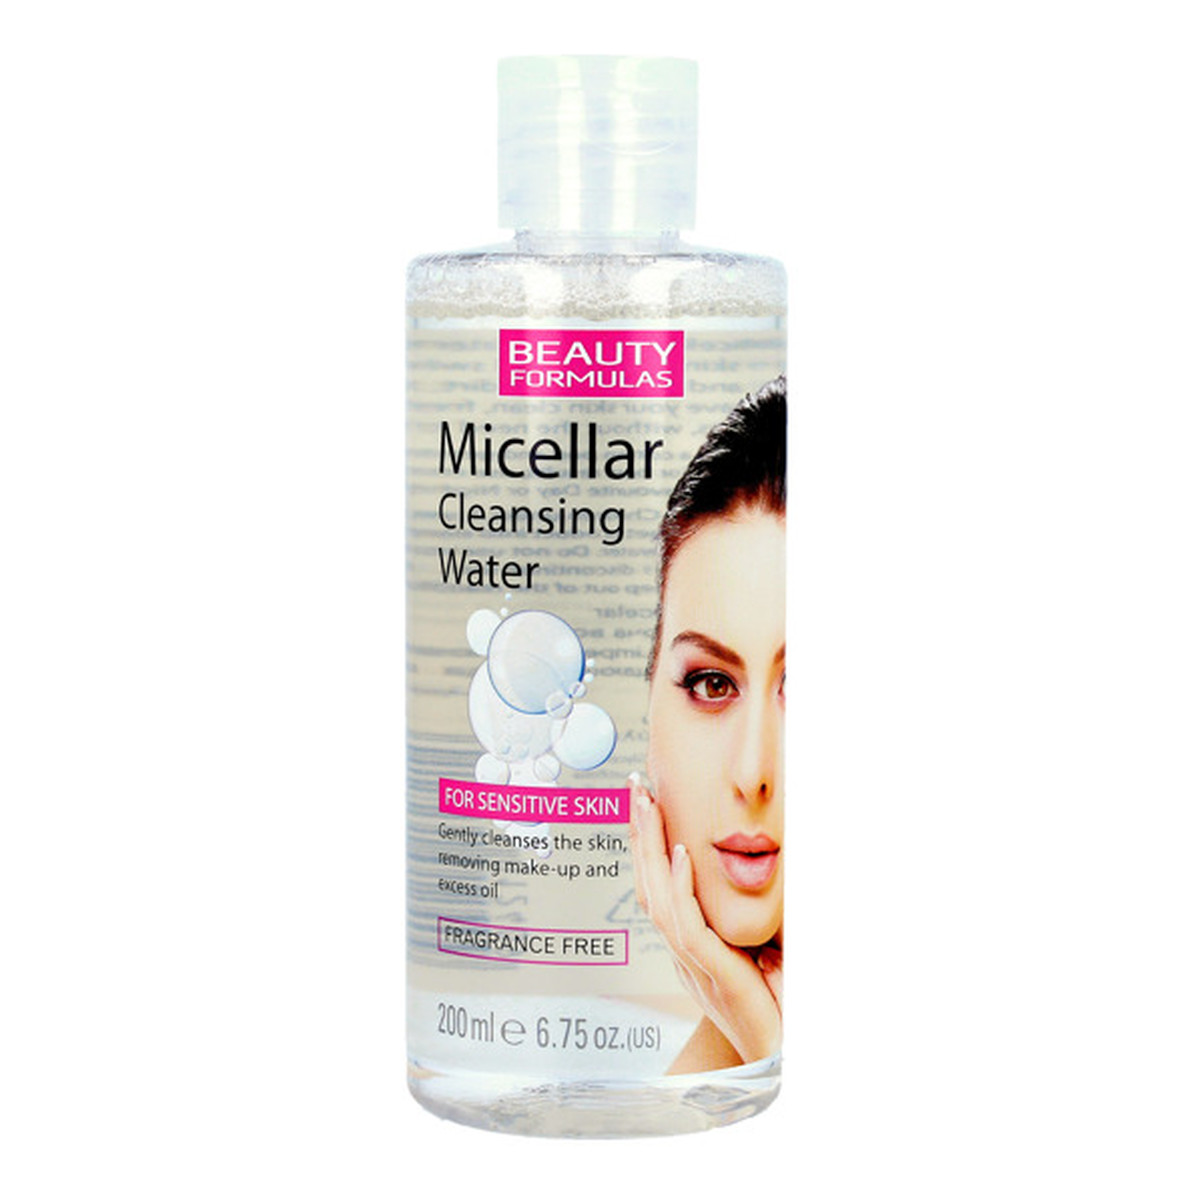 Beauty Formulas Micellar Cleansing płyn micelarny do demakijażu 200ml